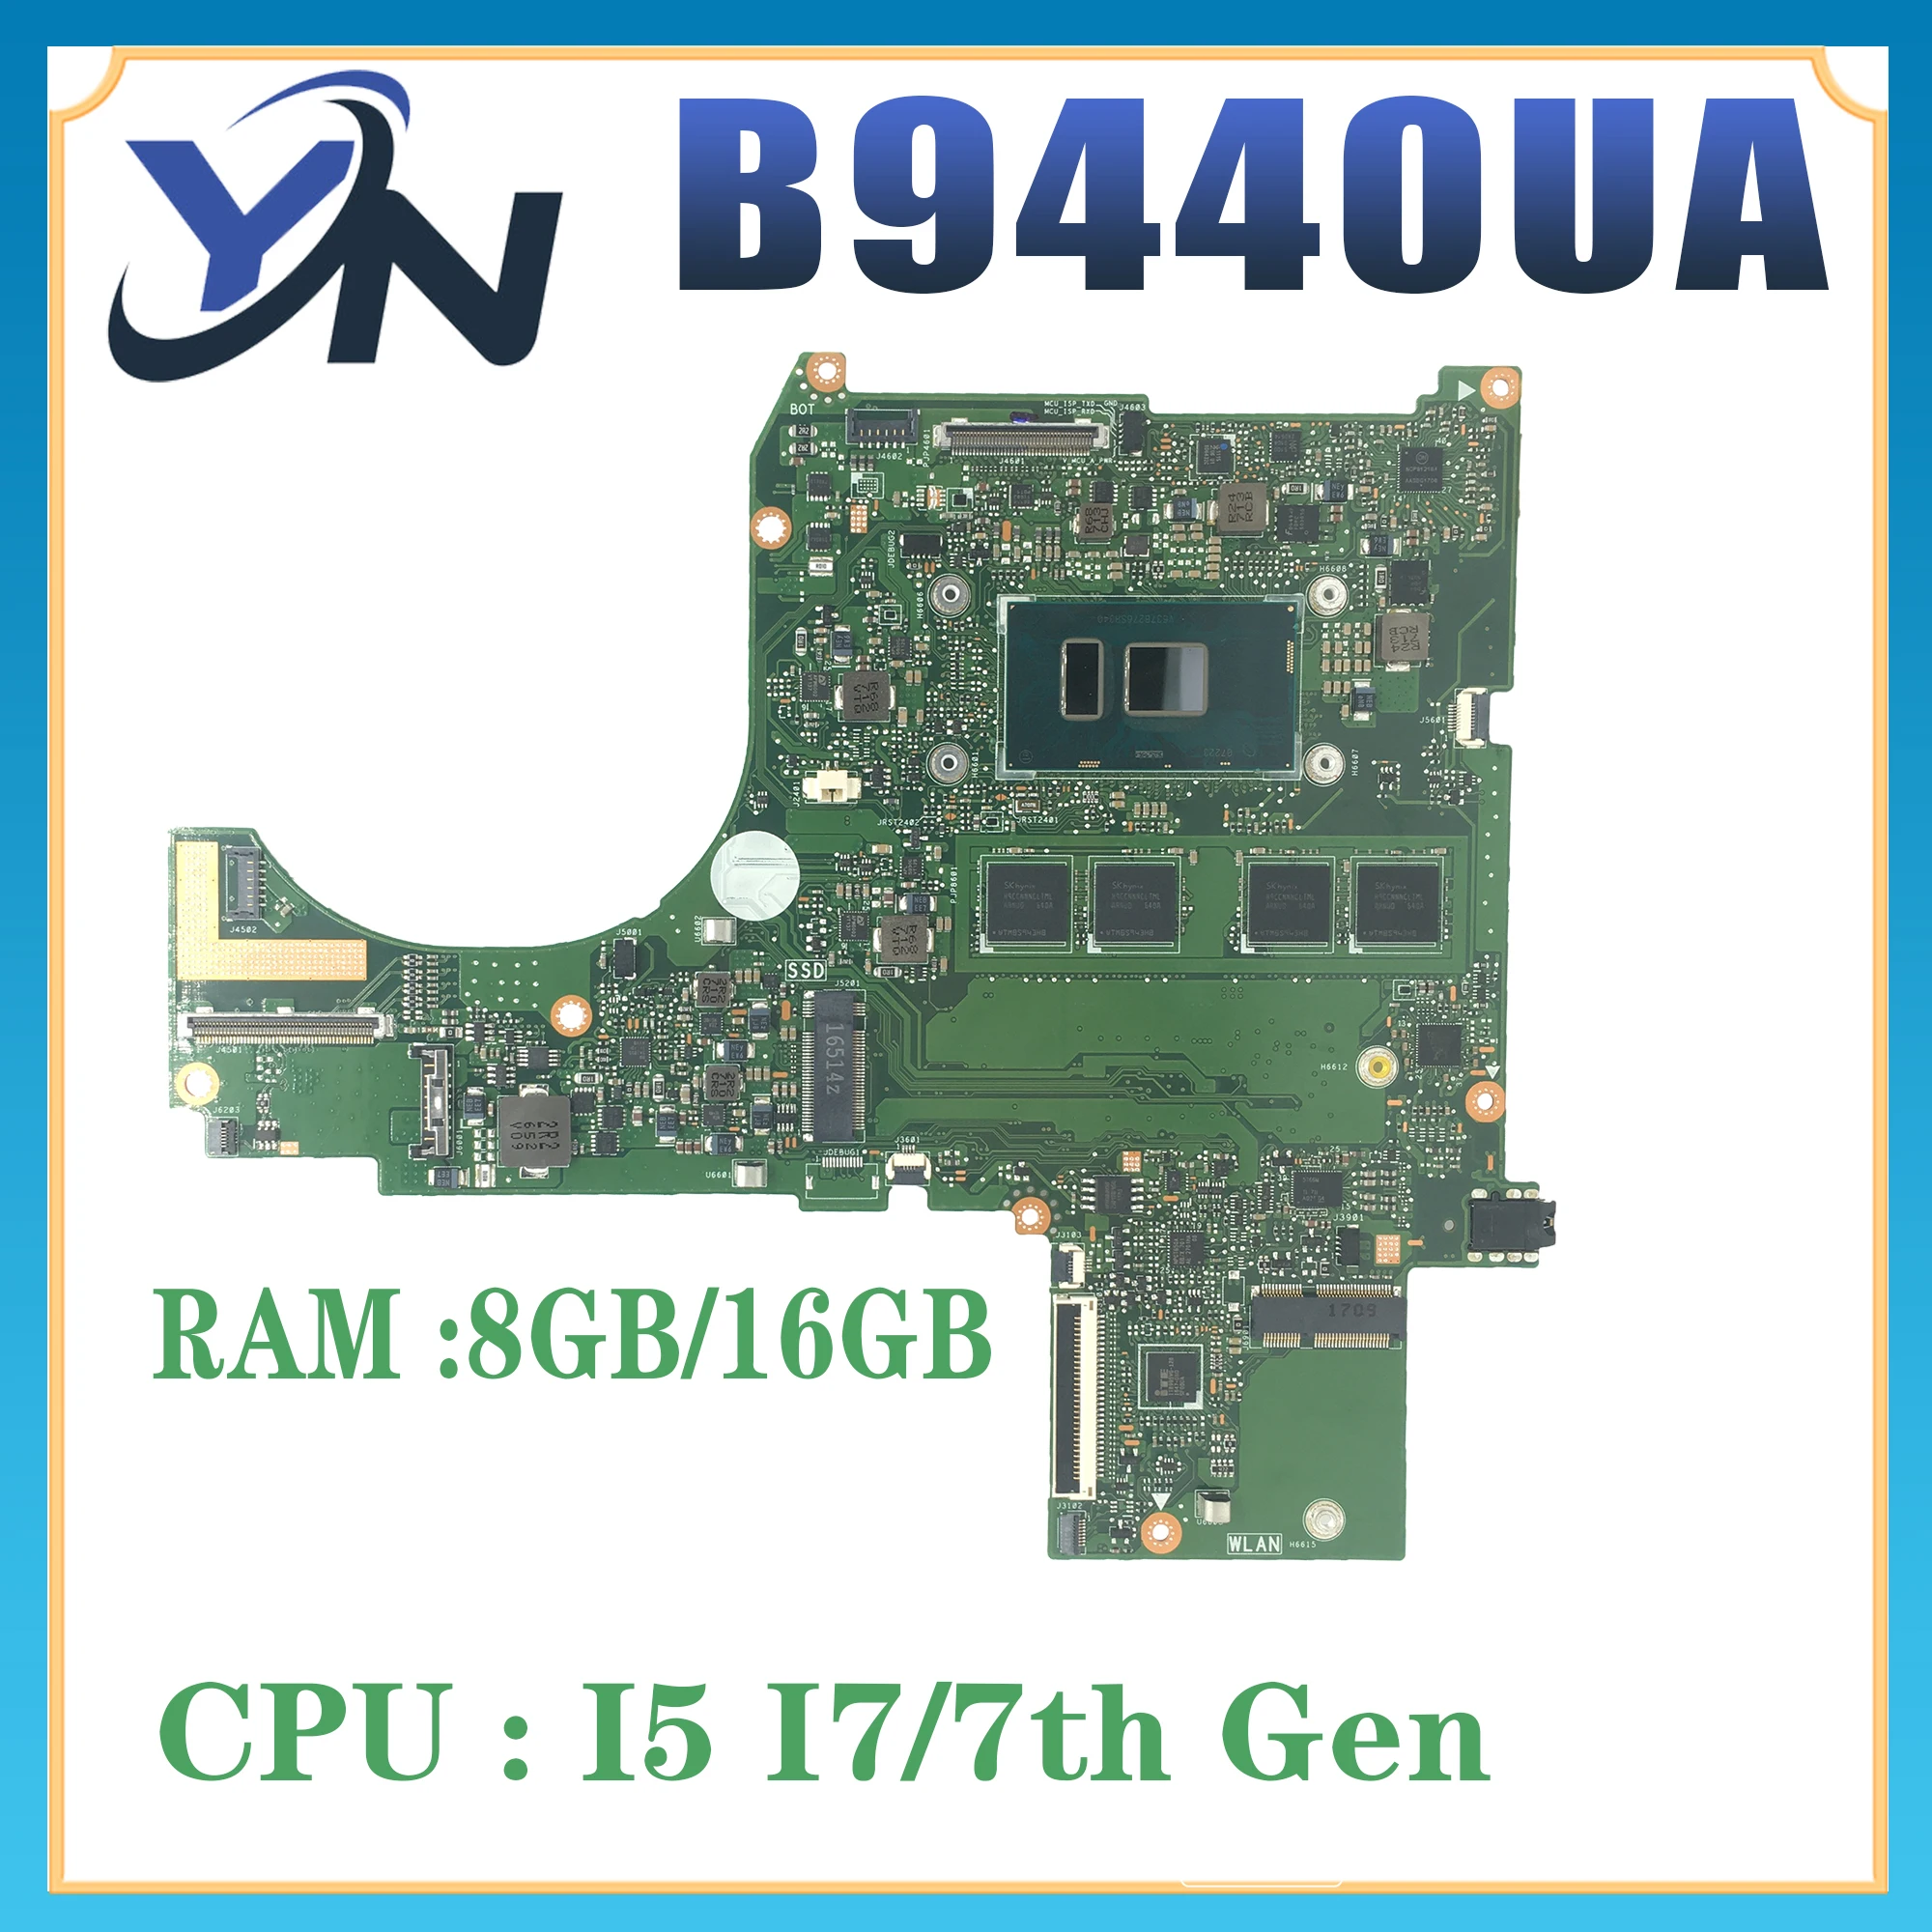 

B9440UA Laotop Motherboard For ASUS ExpertBook B9440 B9440U Mainboard With I5-7300U I7-7500U CPU 8GB 16GB RAM 100% Test OK